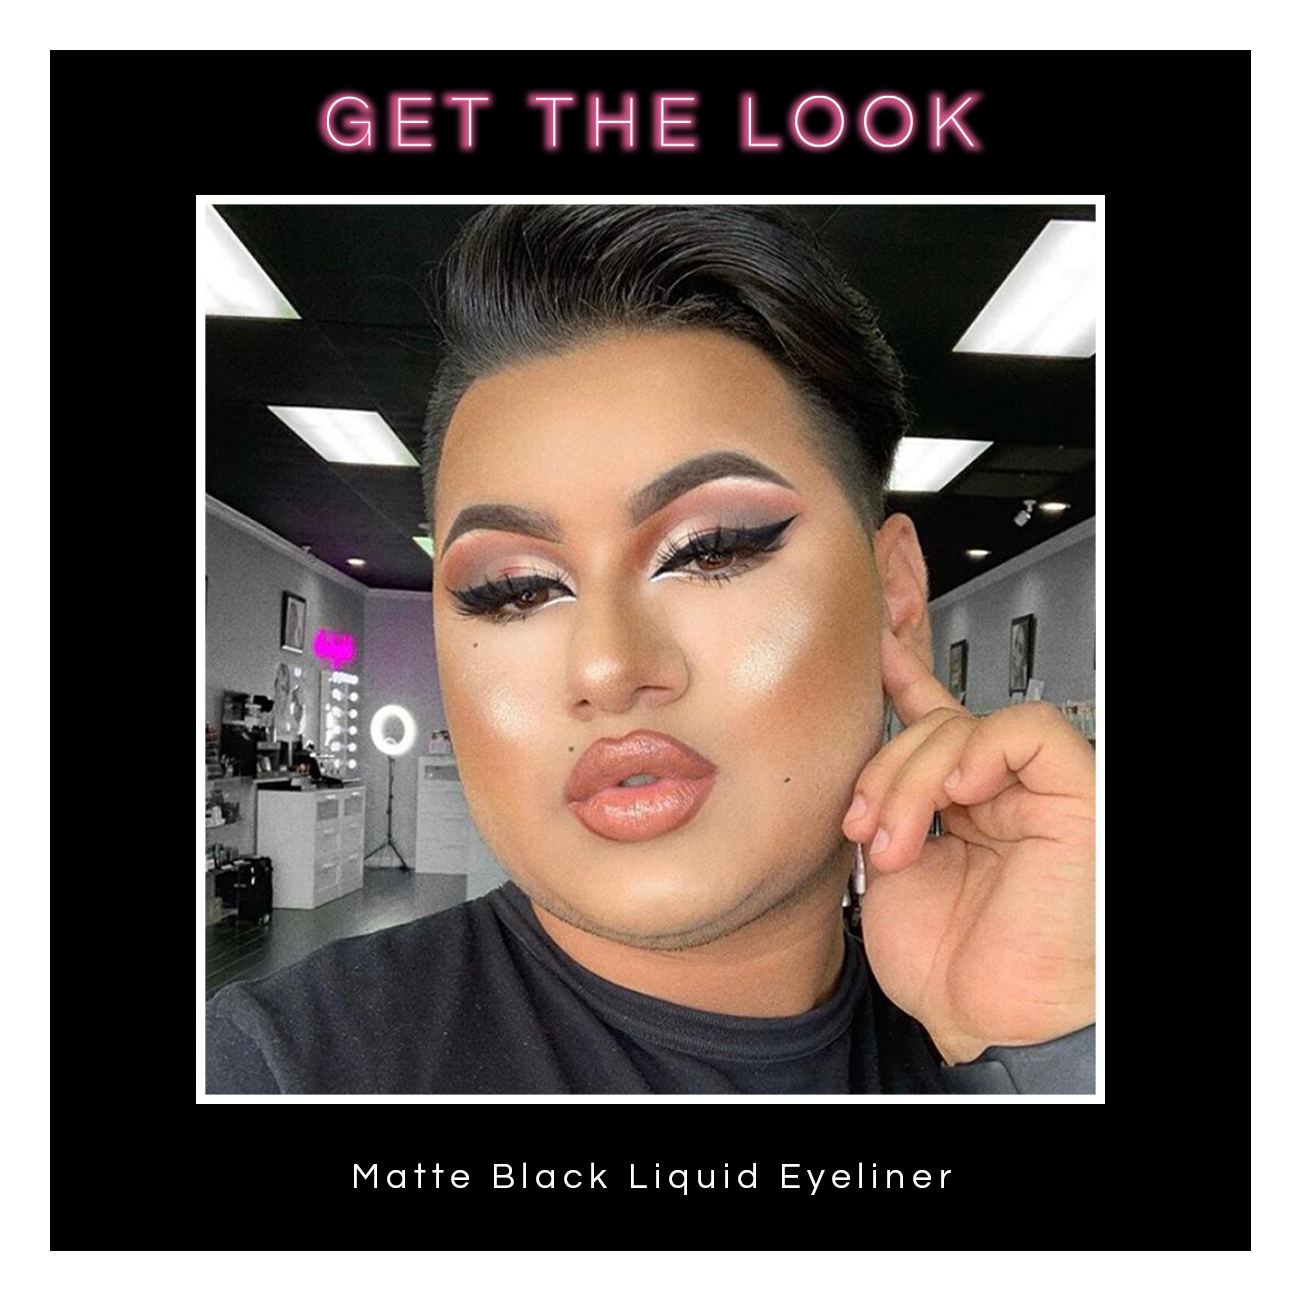 Matte Black Liquid Eyeliner